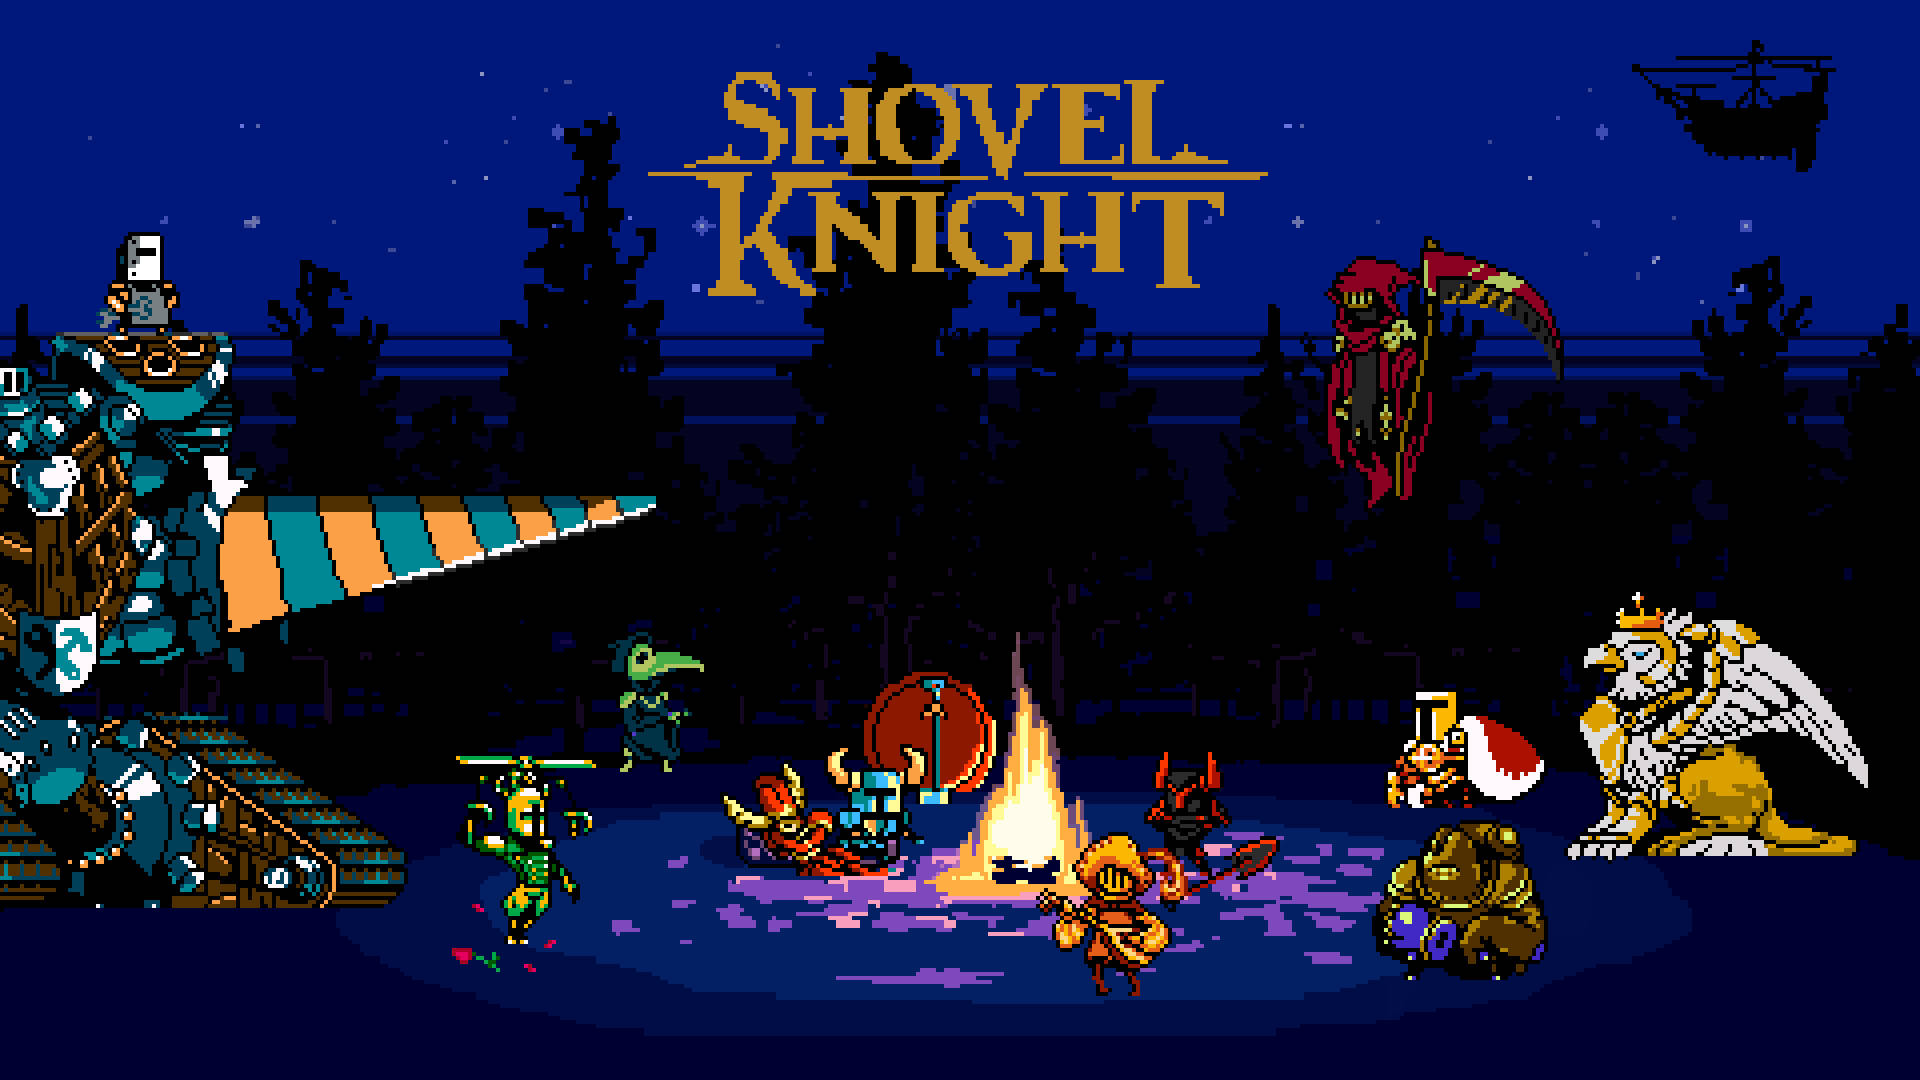 Shovel Knight Retro Pixel Art